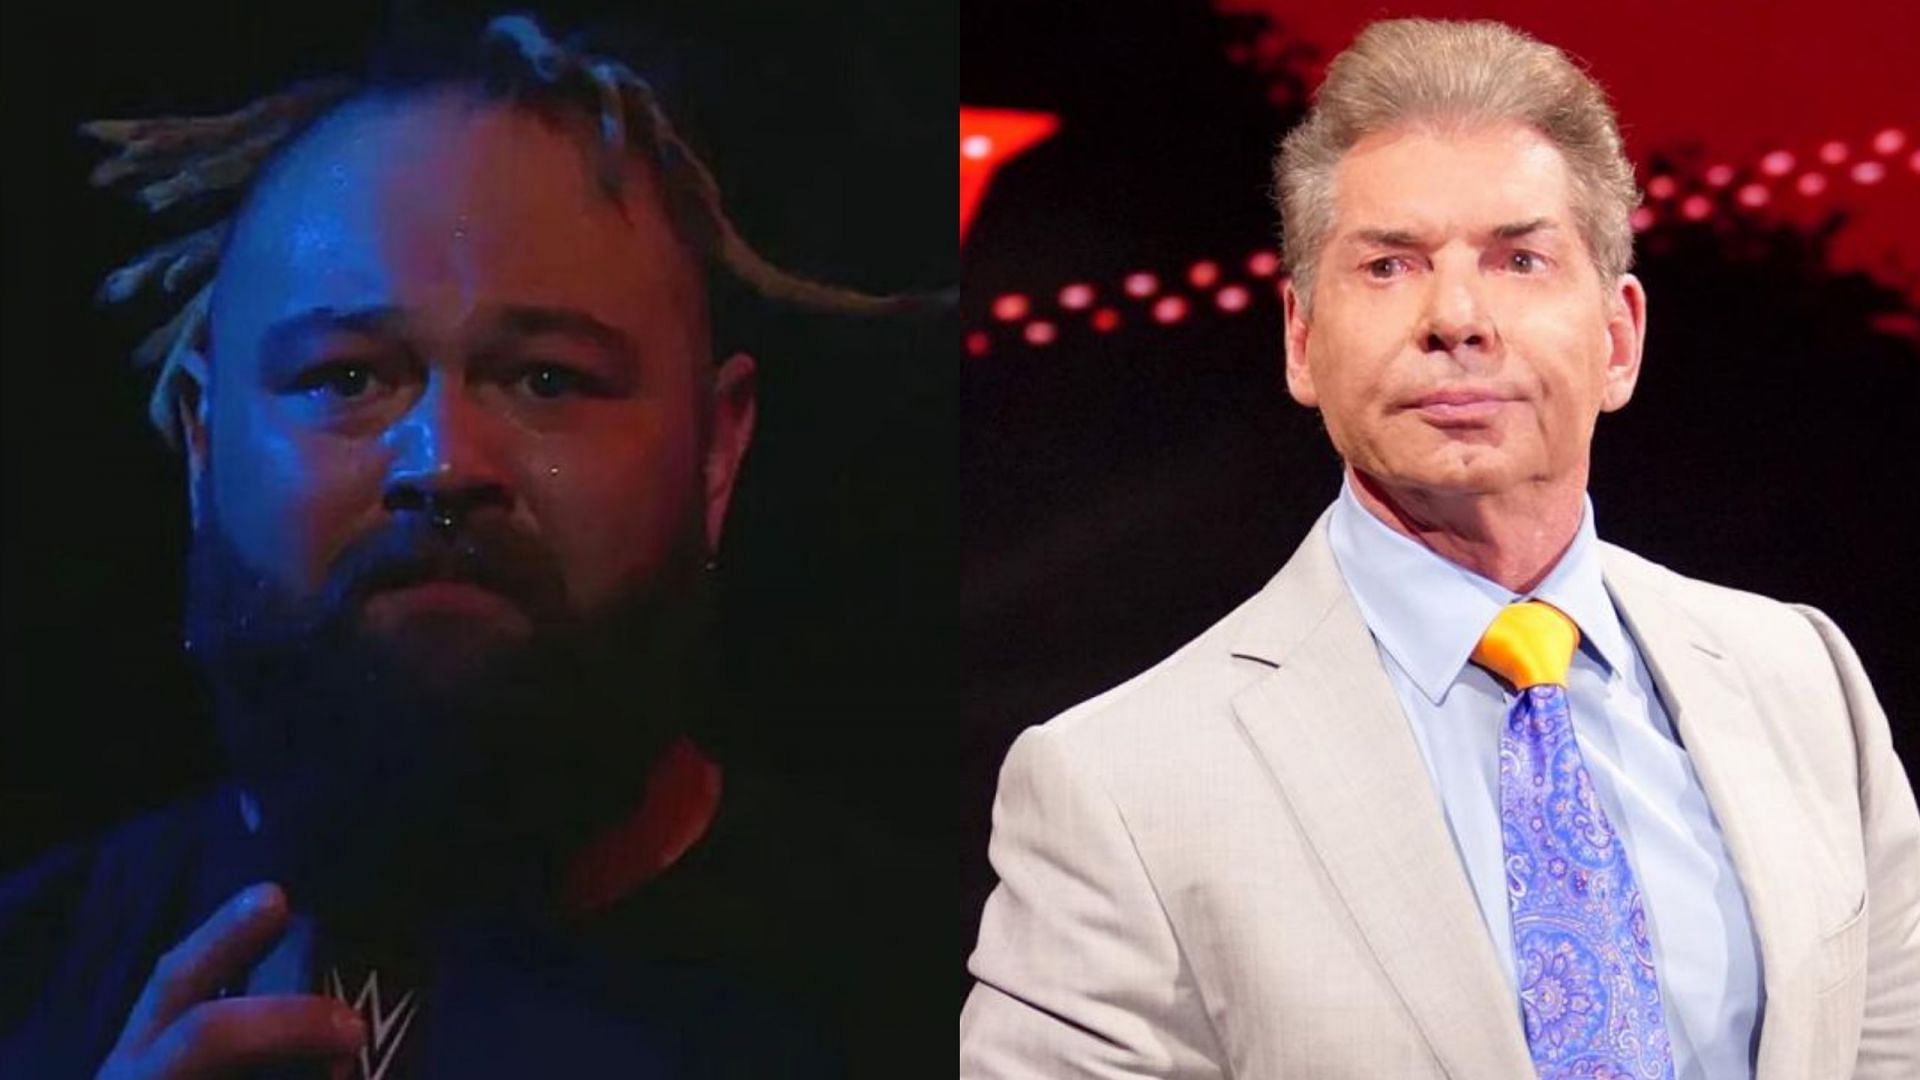 Bray Wyatt (left); Vince McMahon (right)